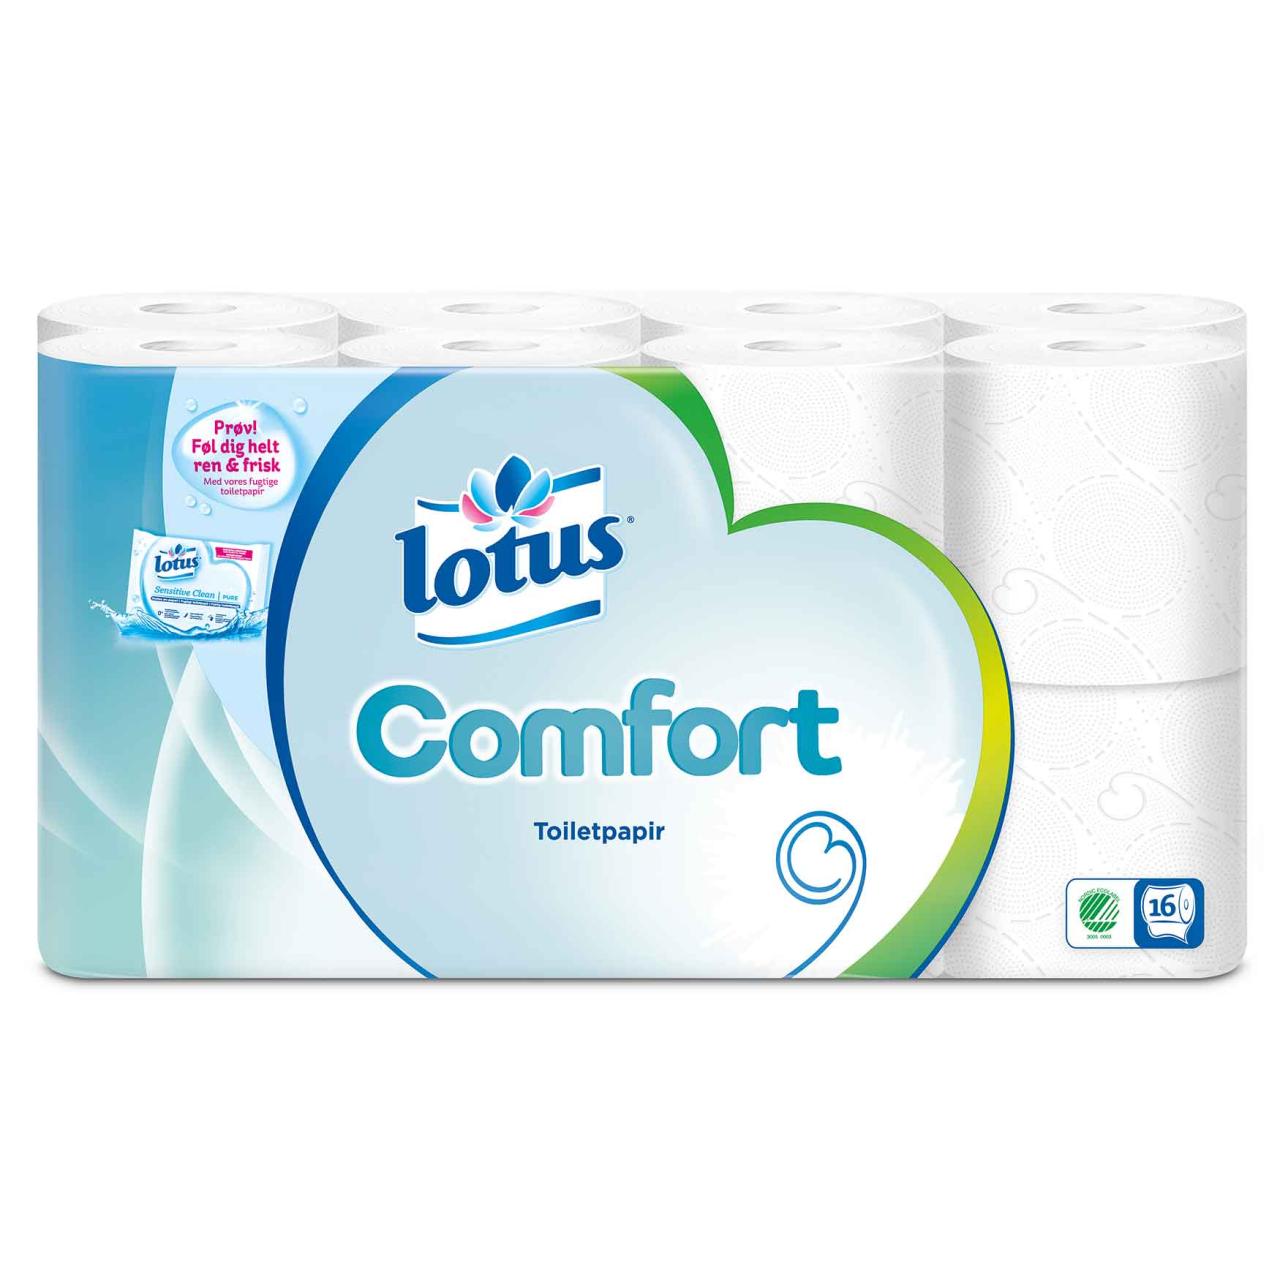 Lotus Comfort Toiletpapir/Toilettenpapier 3lagig 16x155 Blatt